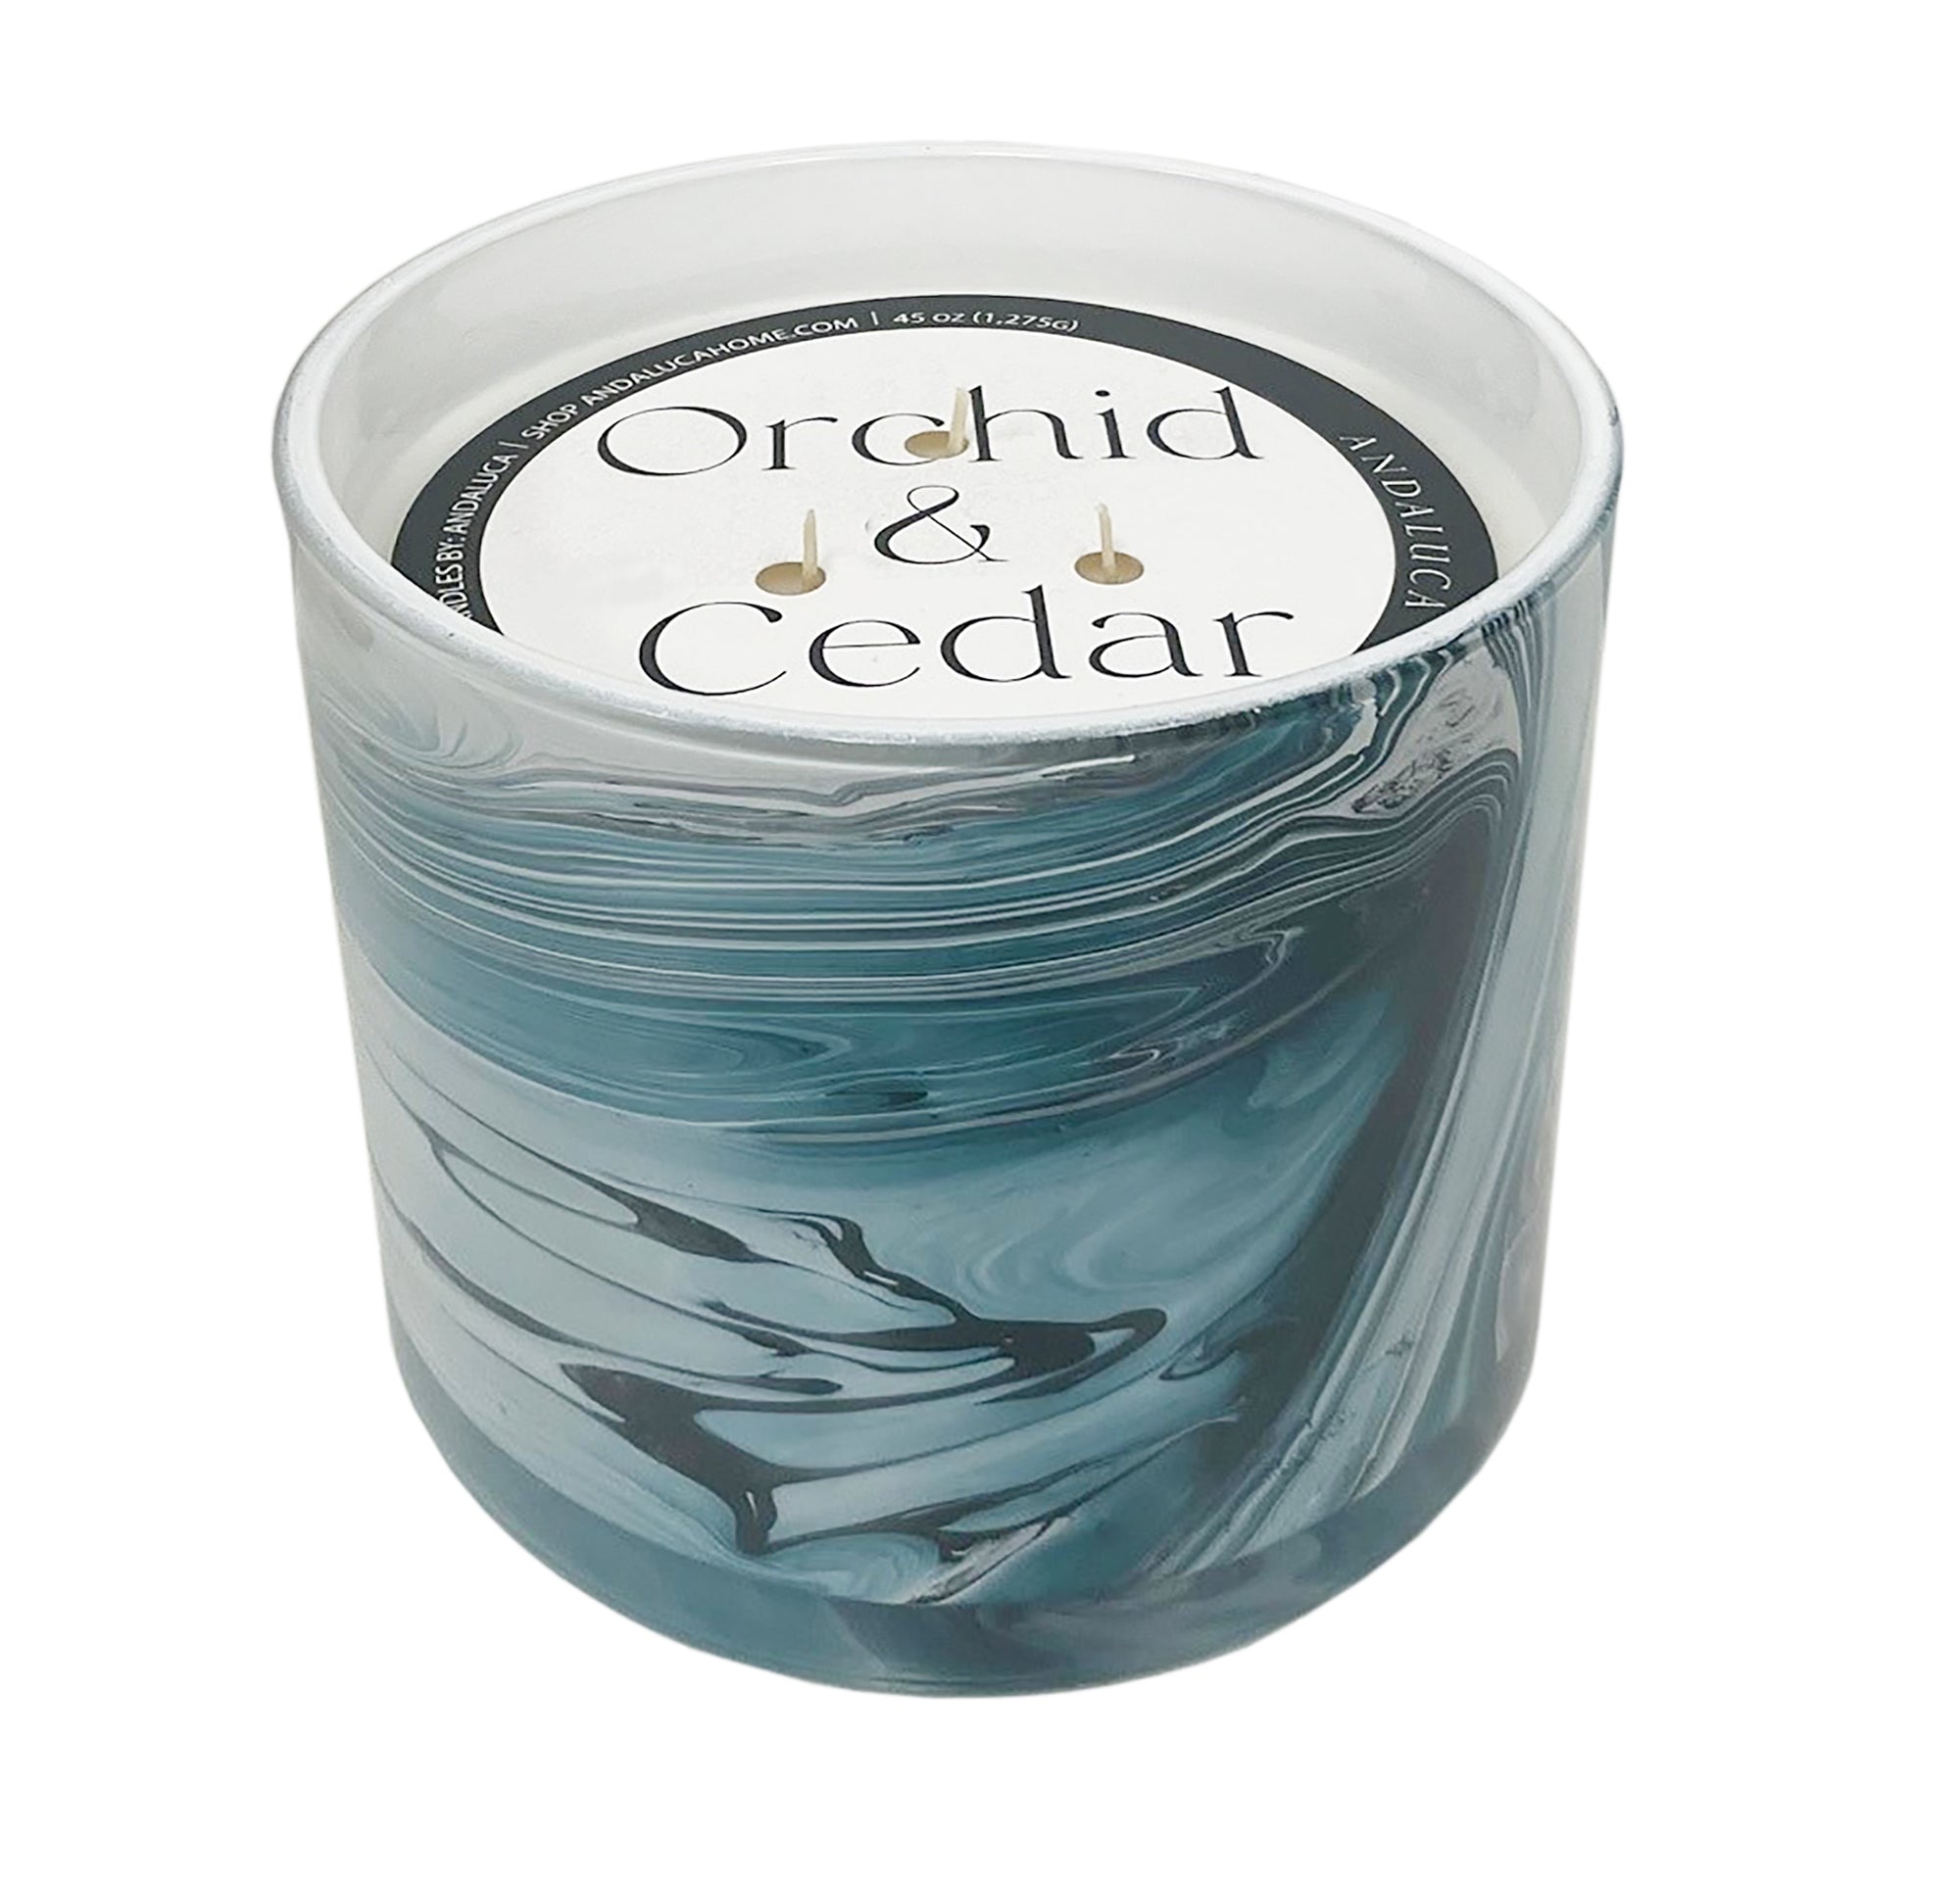 JUMBO Orchid & Cedar 45 oz. Swirl Glass Candle